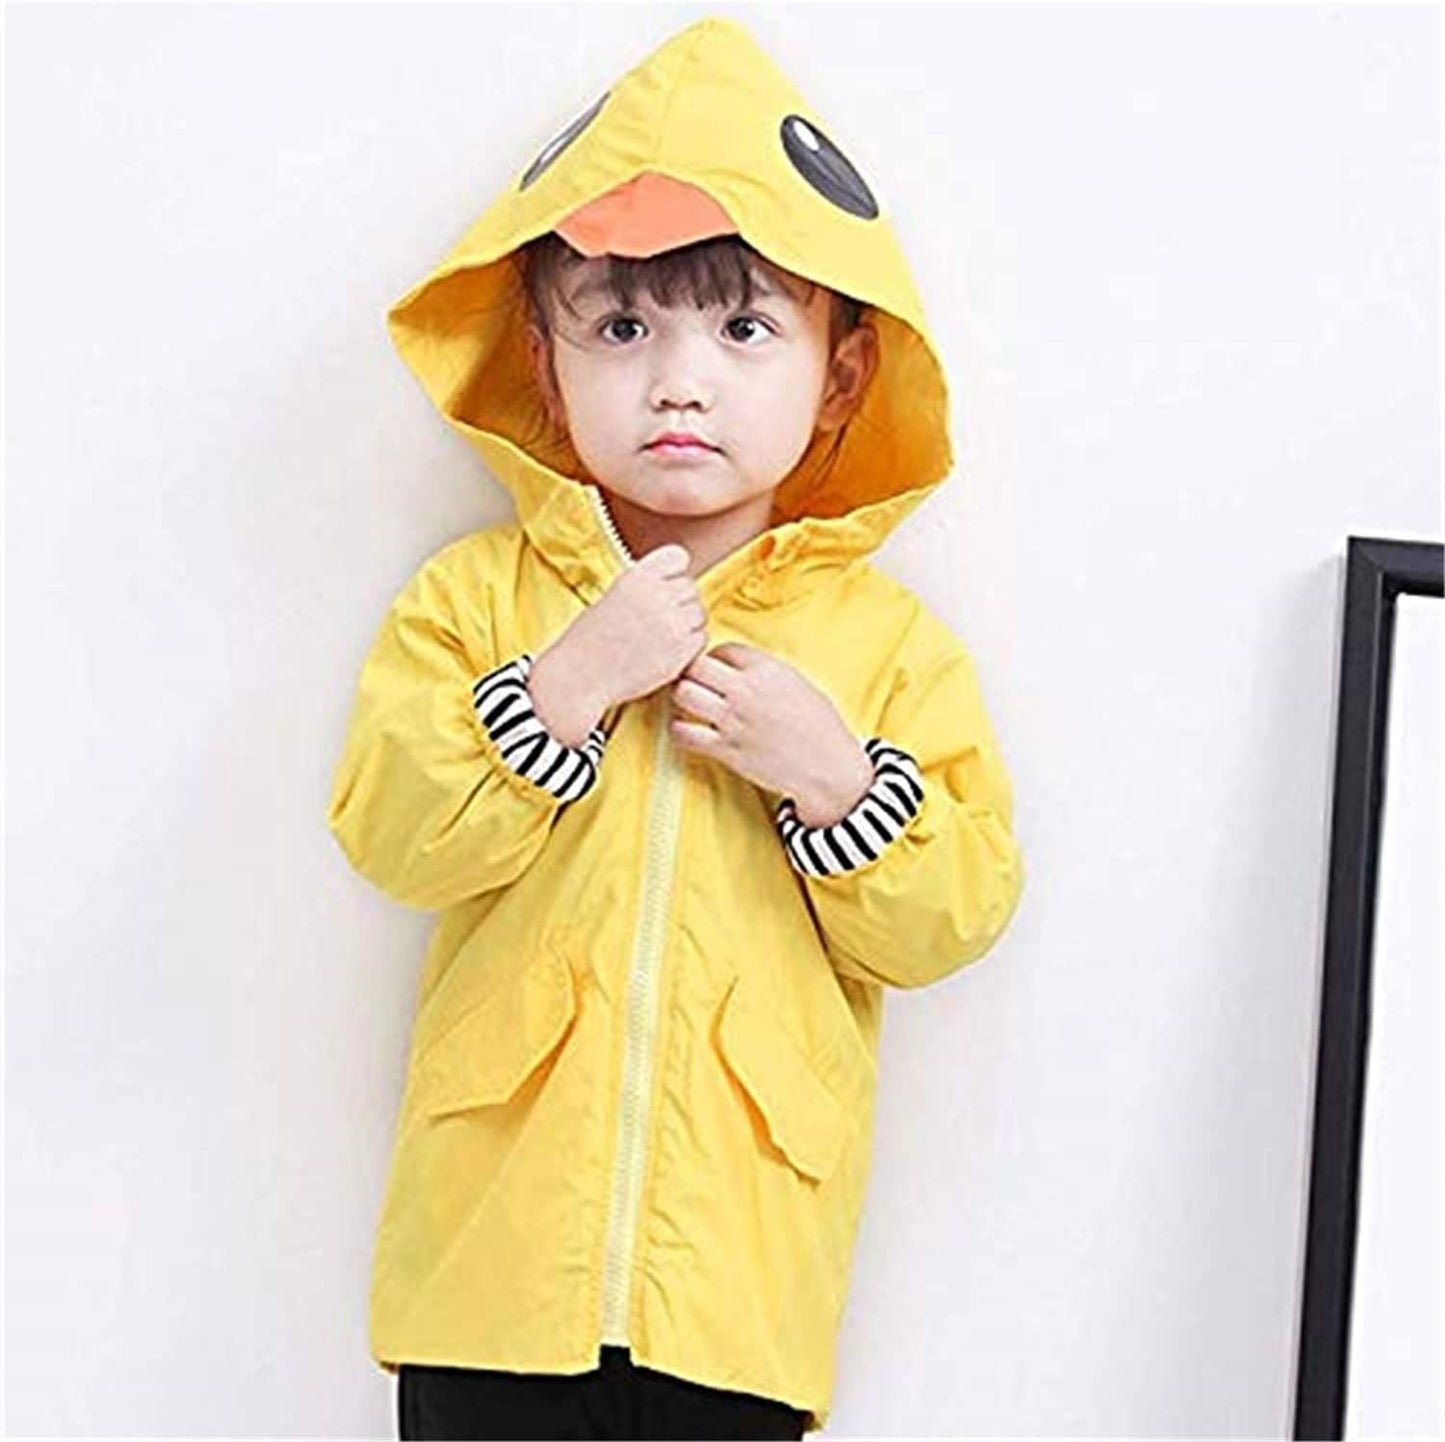 Toddler Baby Boy Girl Duck Rain Jacket Cute Cartoon Yellow Raincoat Hoodie Kids Coat Fall Winter School Outfit